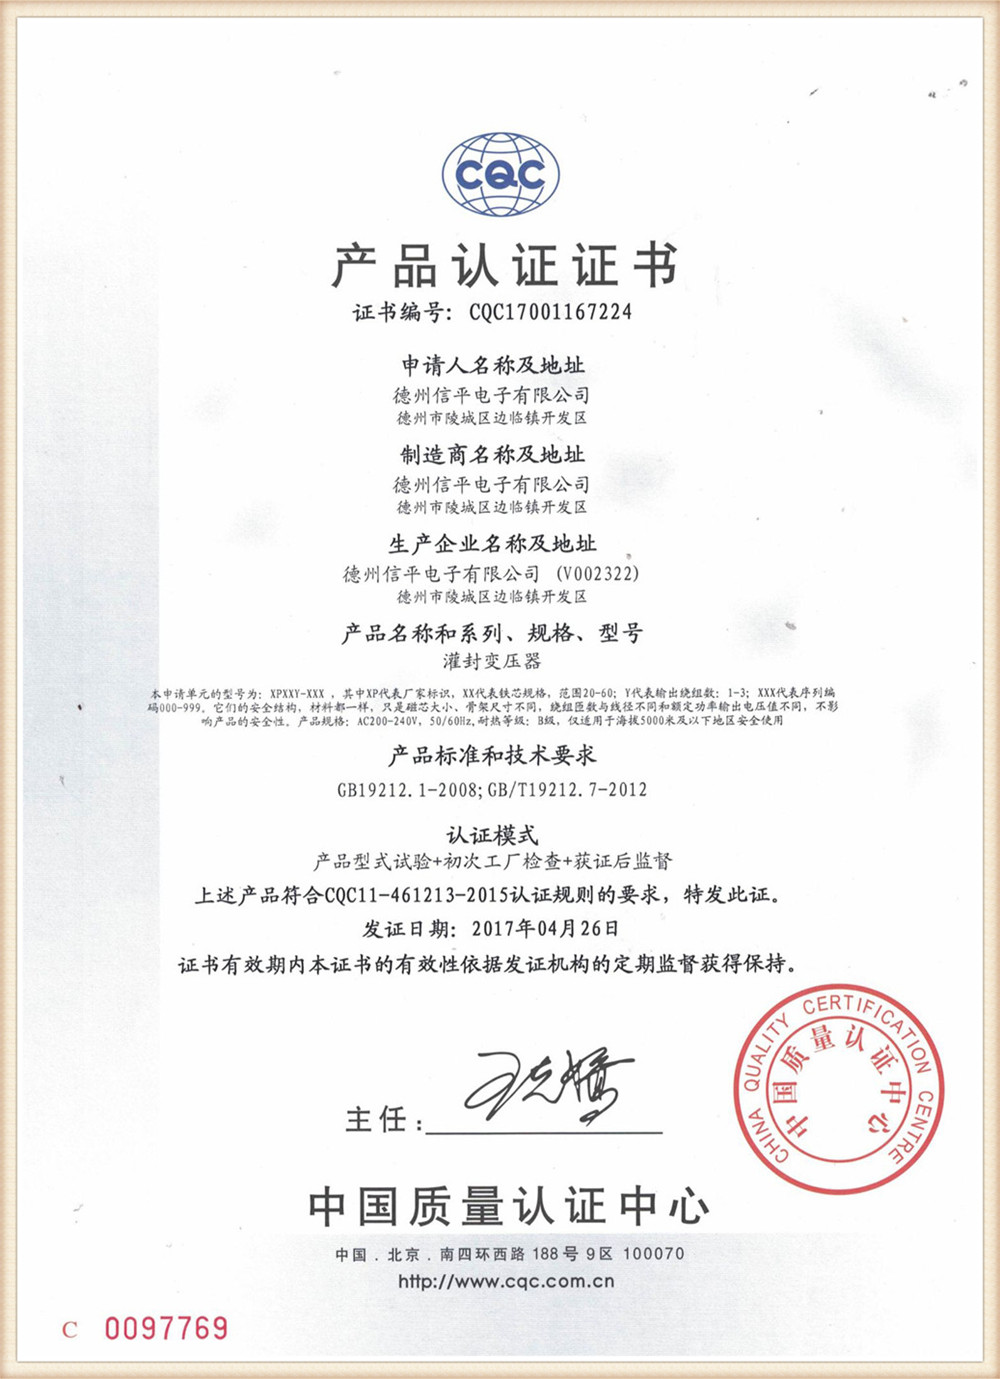 Сертификат12